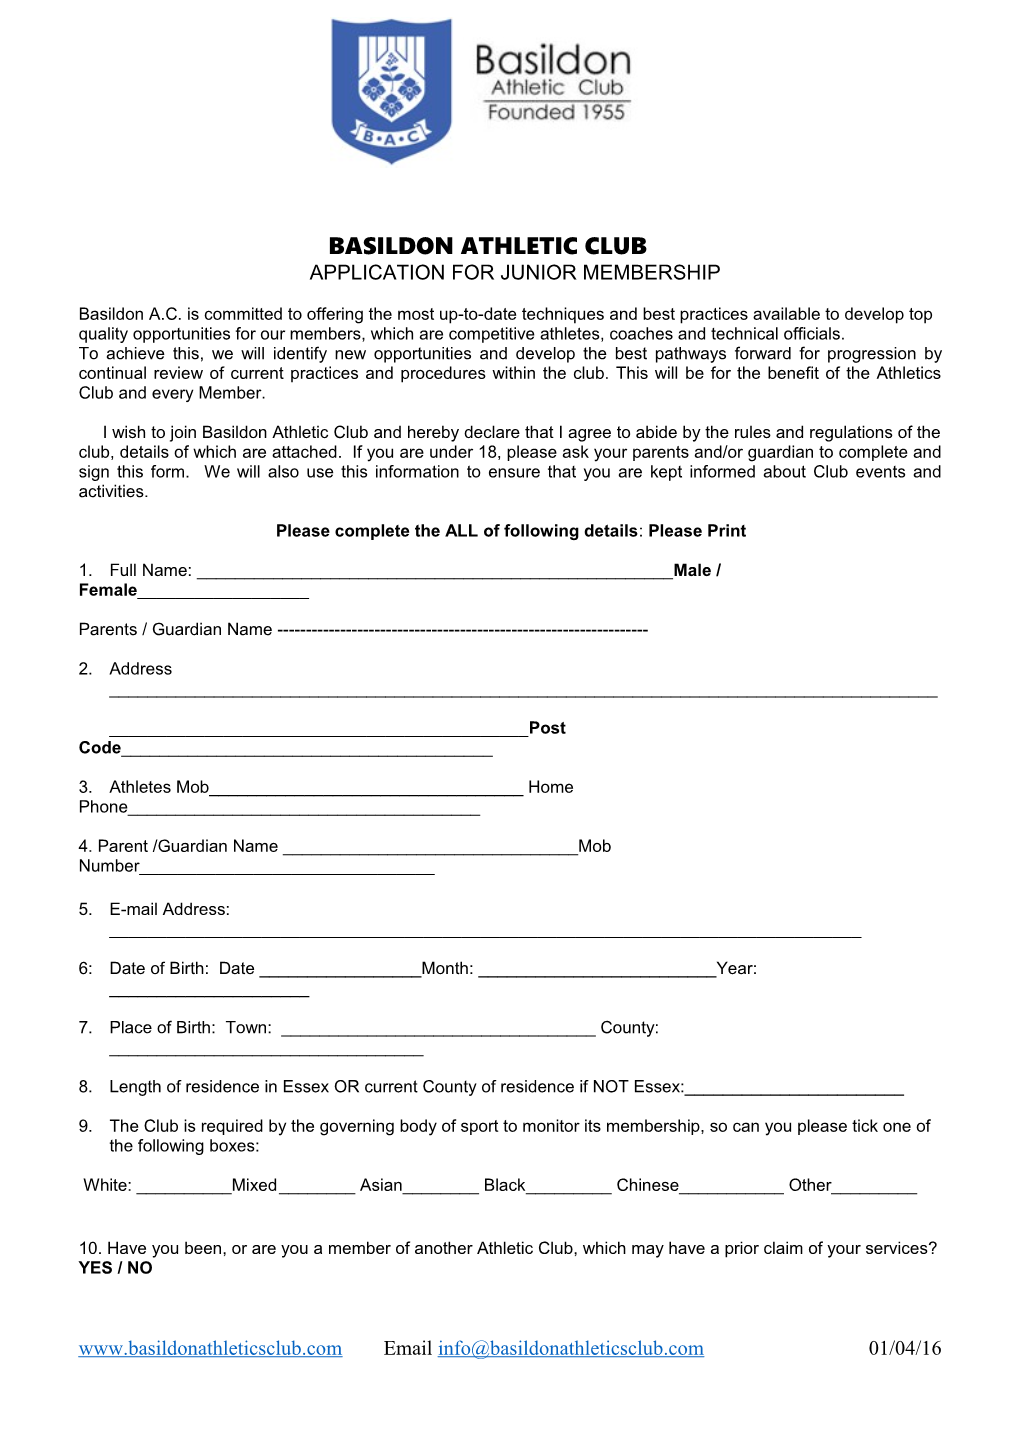 Basildon Athletic Club